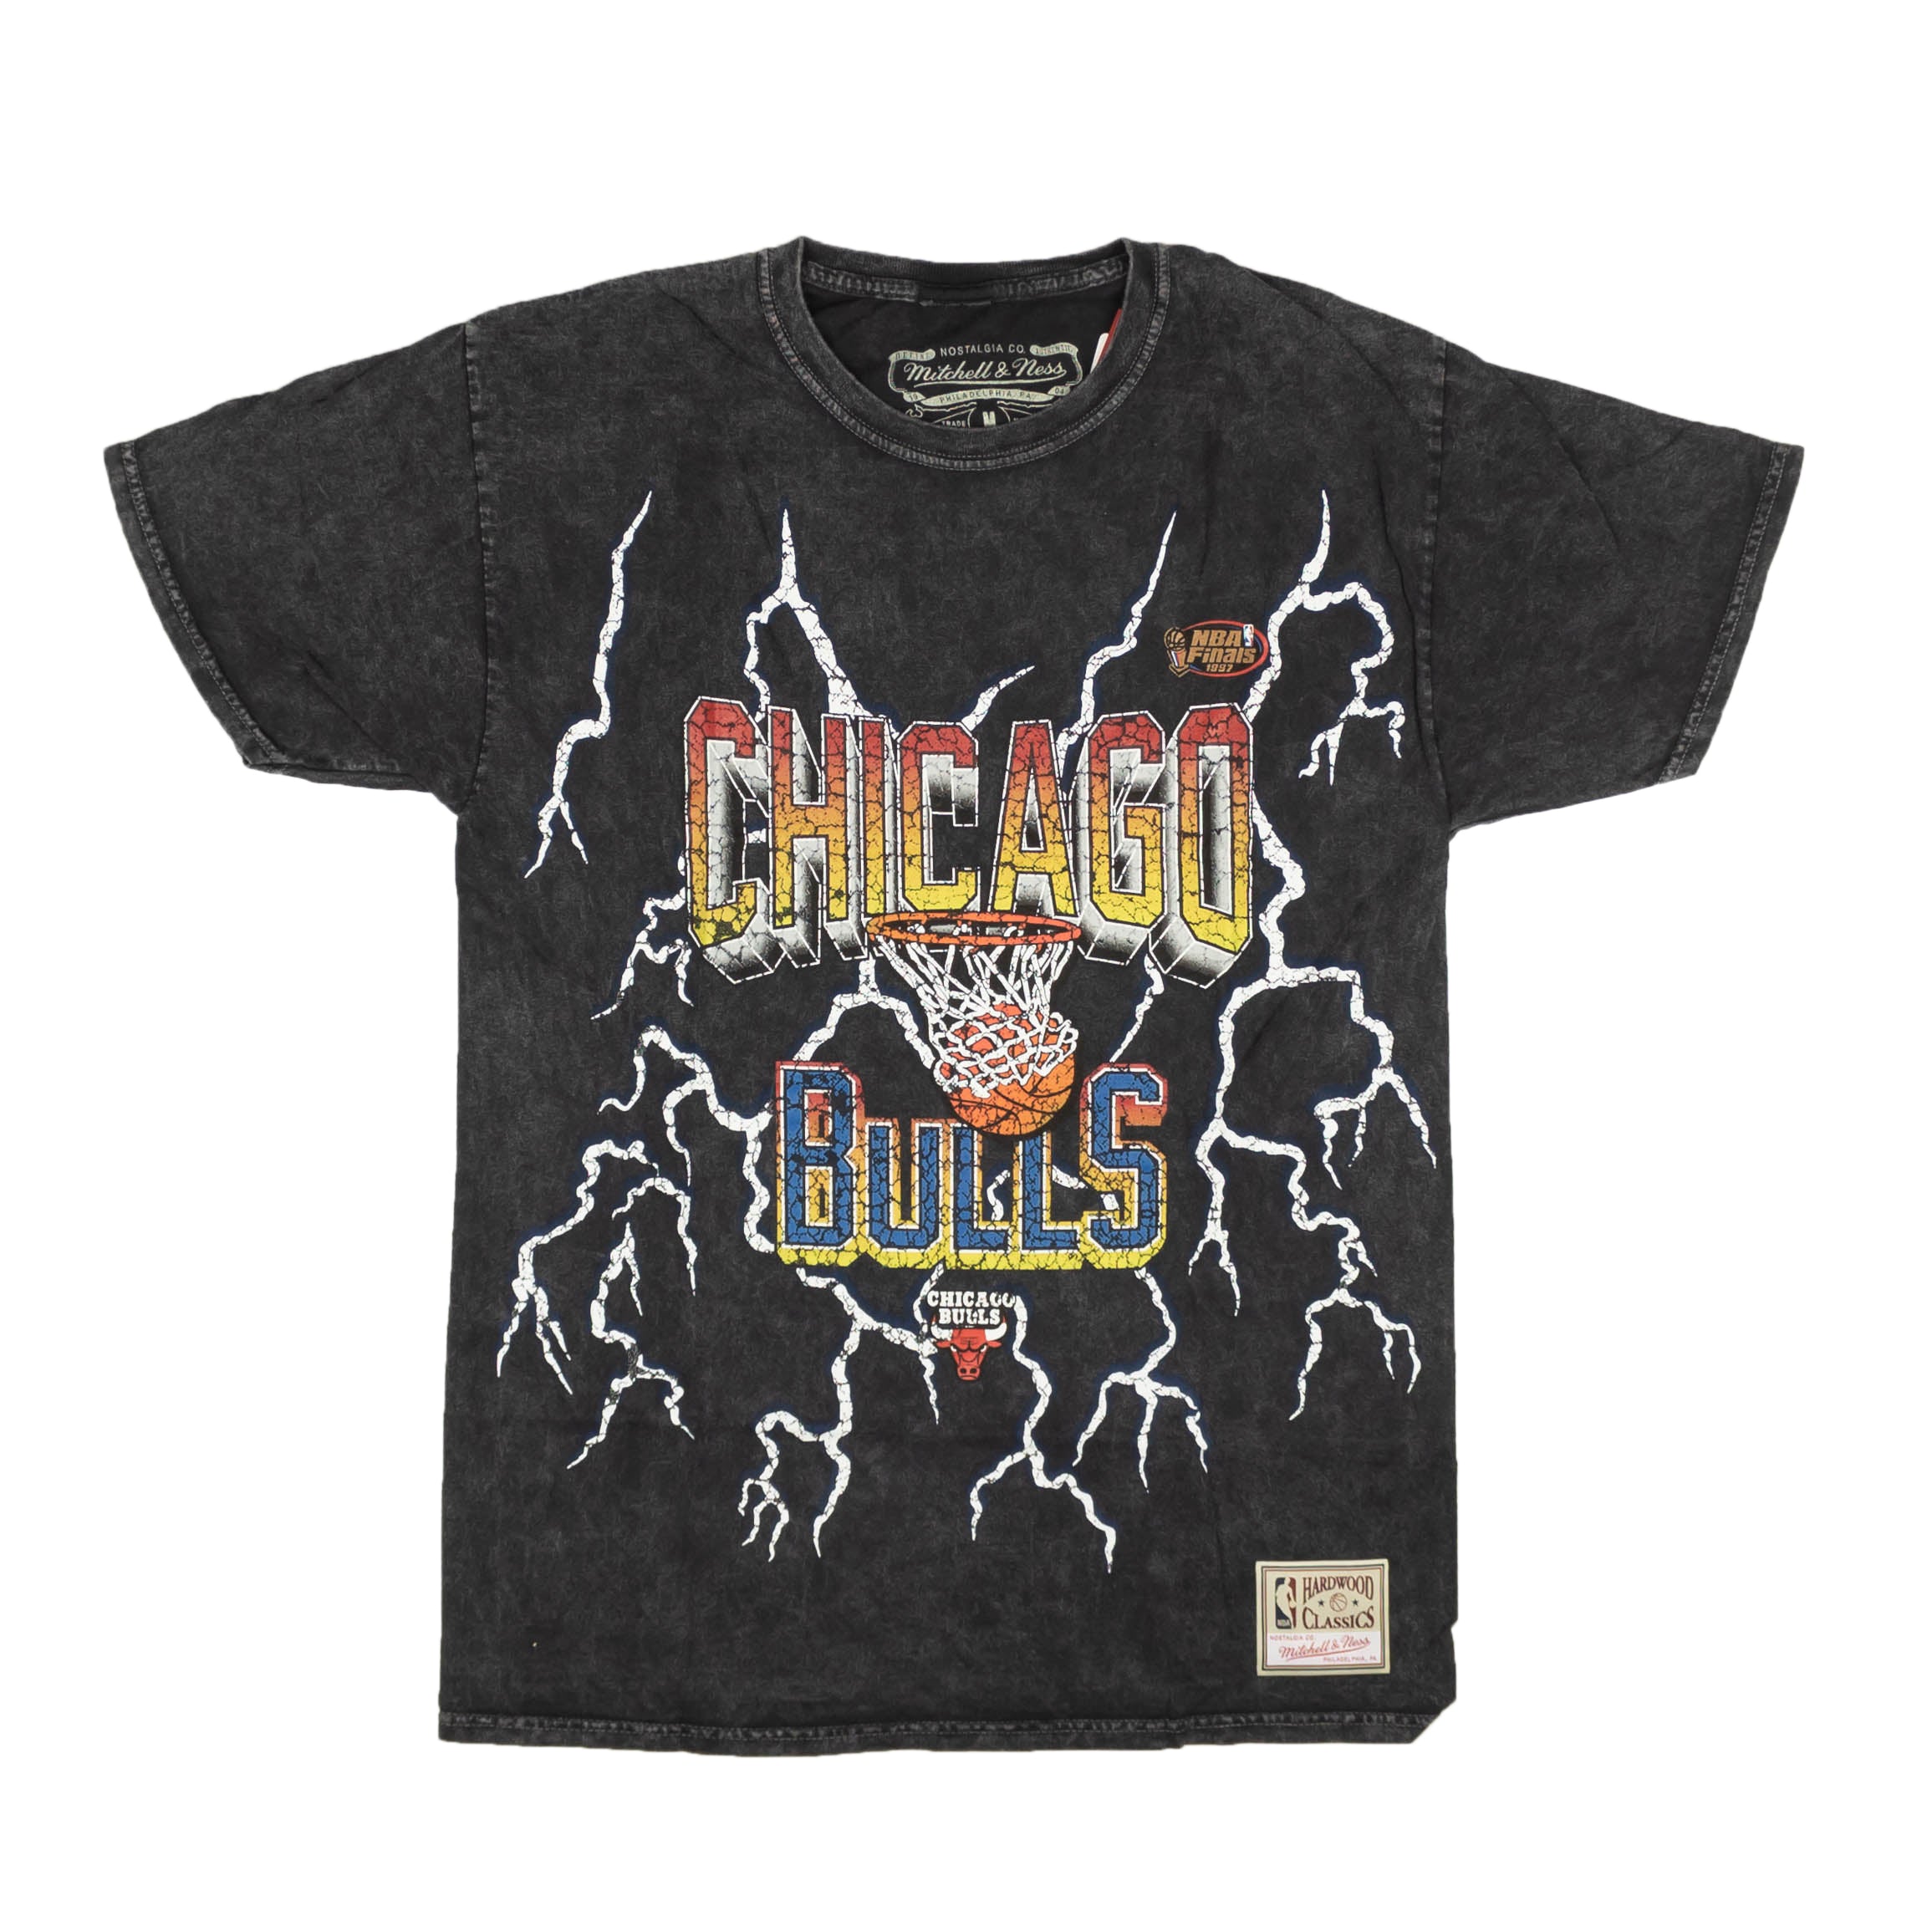 Mitchell & Ness Nba Vintage Lightning Warriors T-Shirt - Black